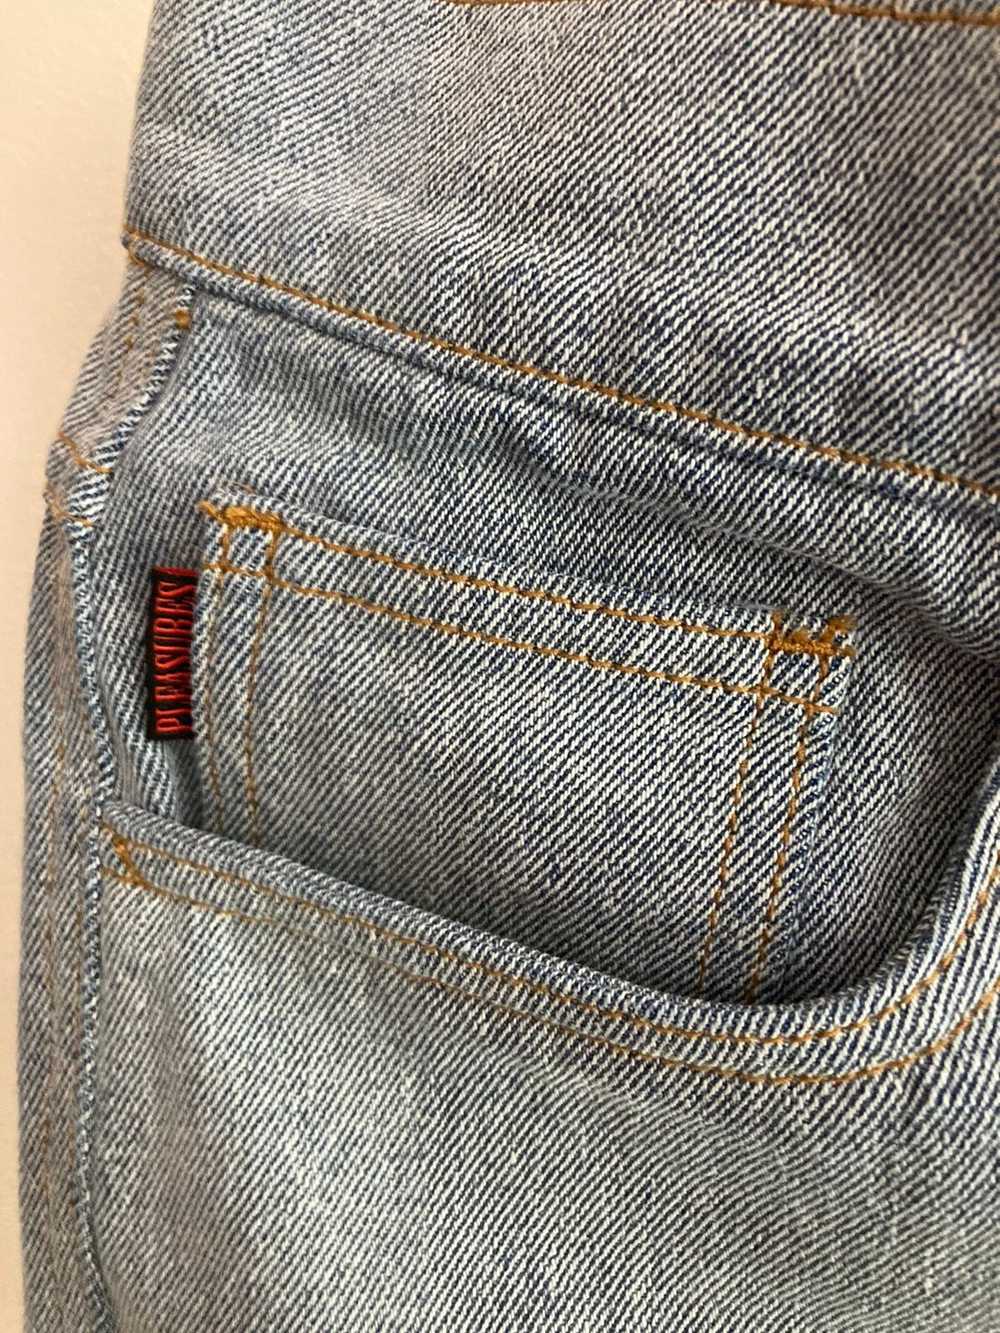 Pleasures Waterfall Jeans (under retail) - image 6